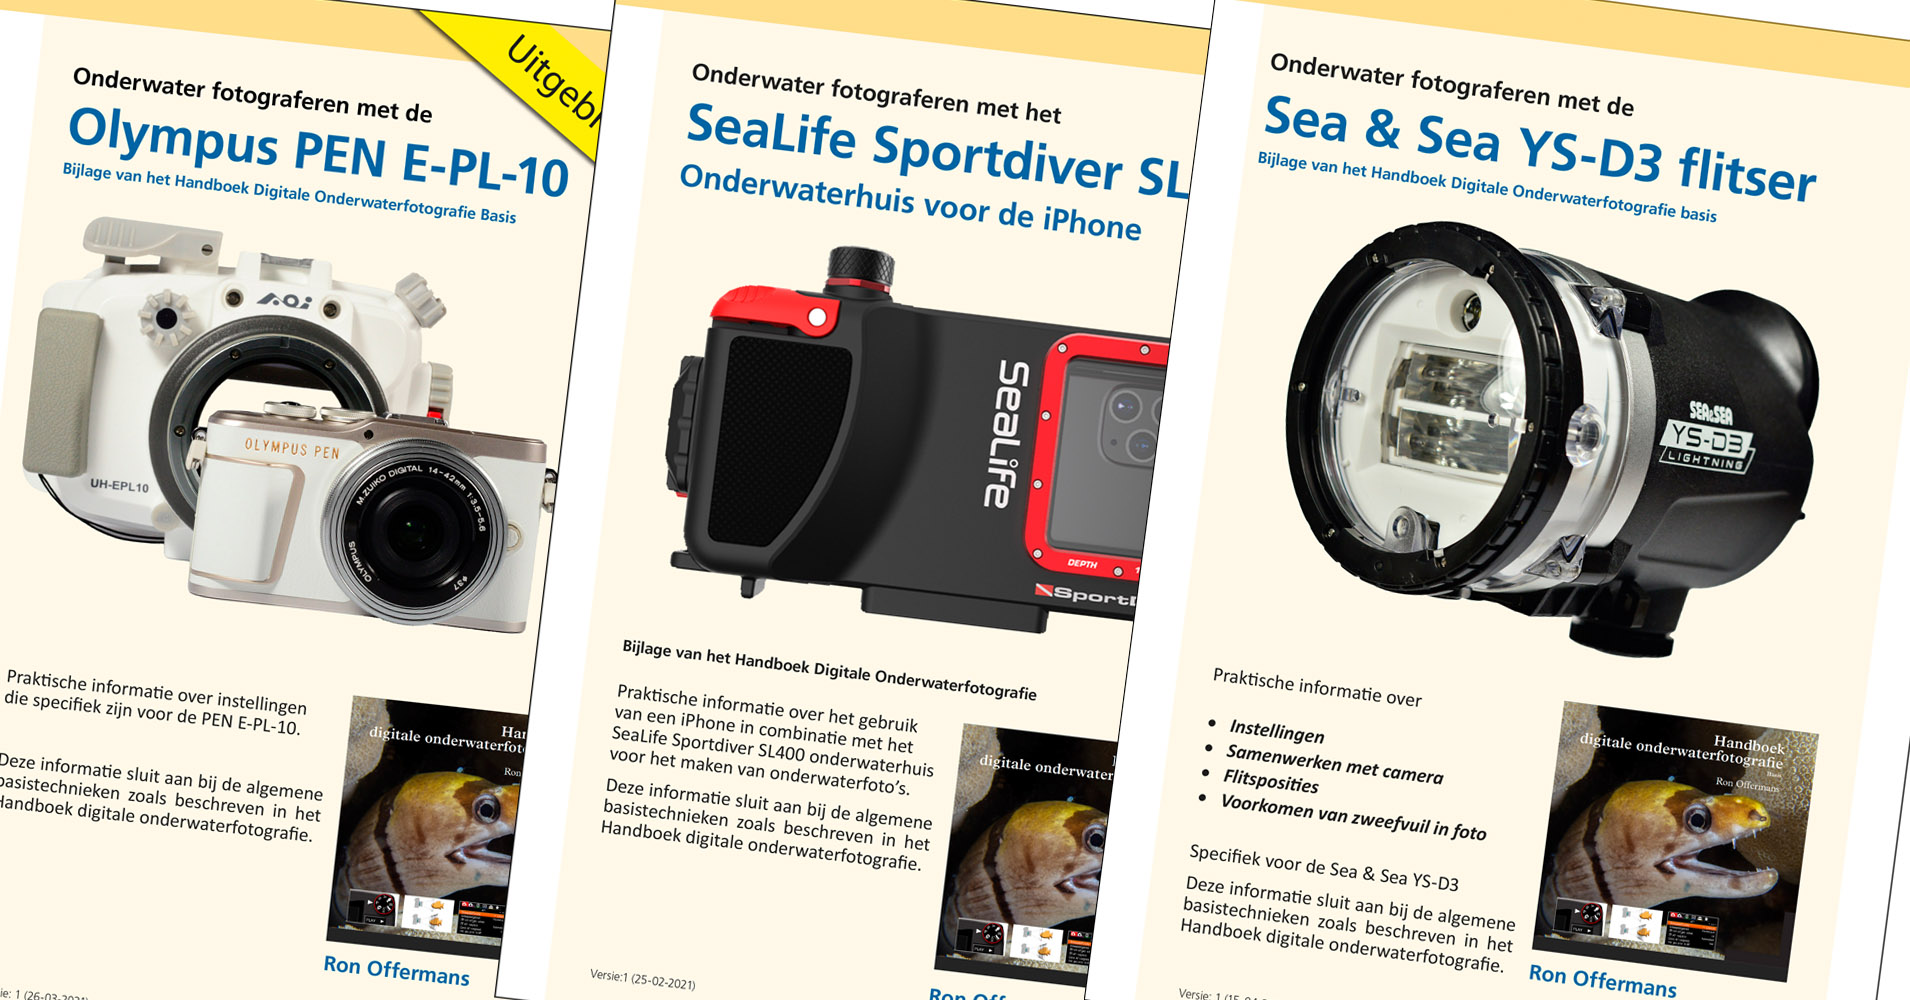 Nieuwe uitlegboekjes voor Olympus PEN E-PL10, Sealife Sportdiver SL400 en Sea & Sea YS-D3 flitser